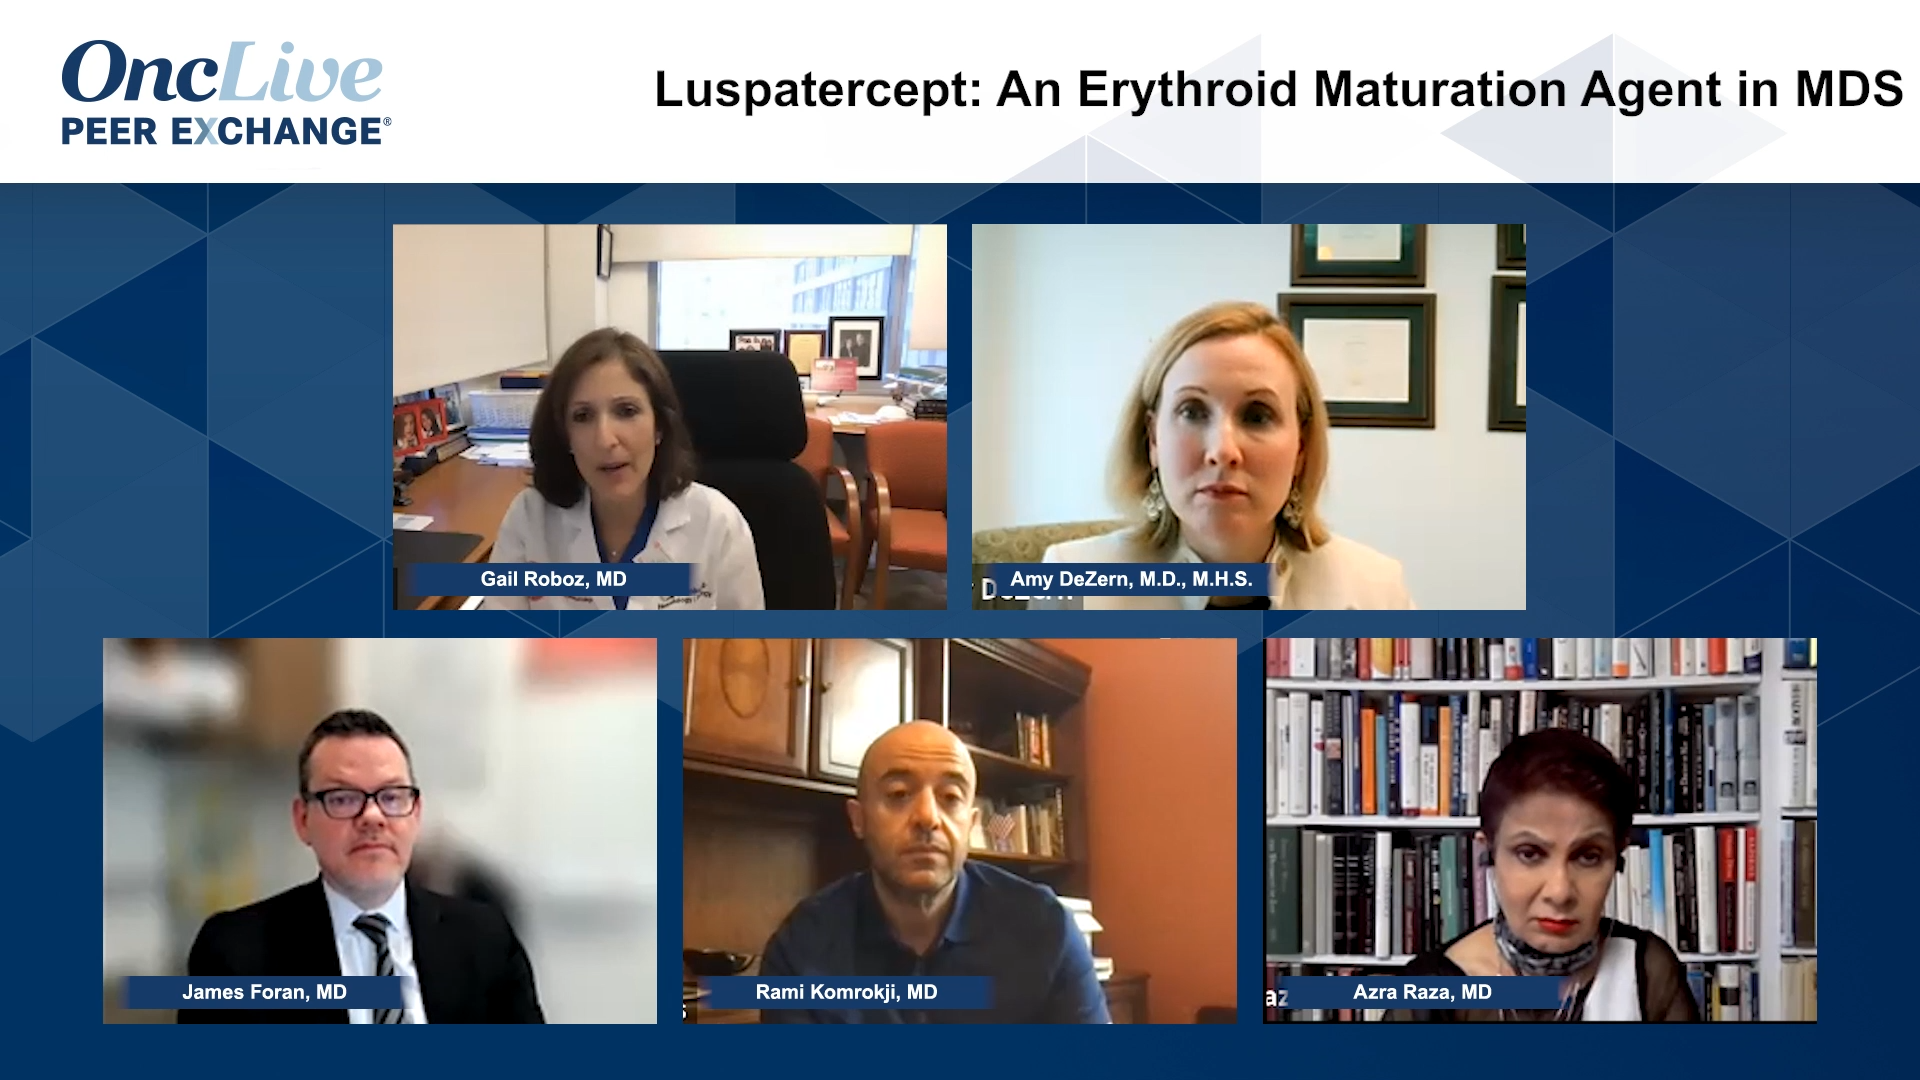 Luspatercept: An Erythroid Maturation Agent in MDS